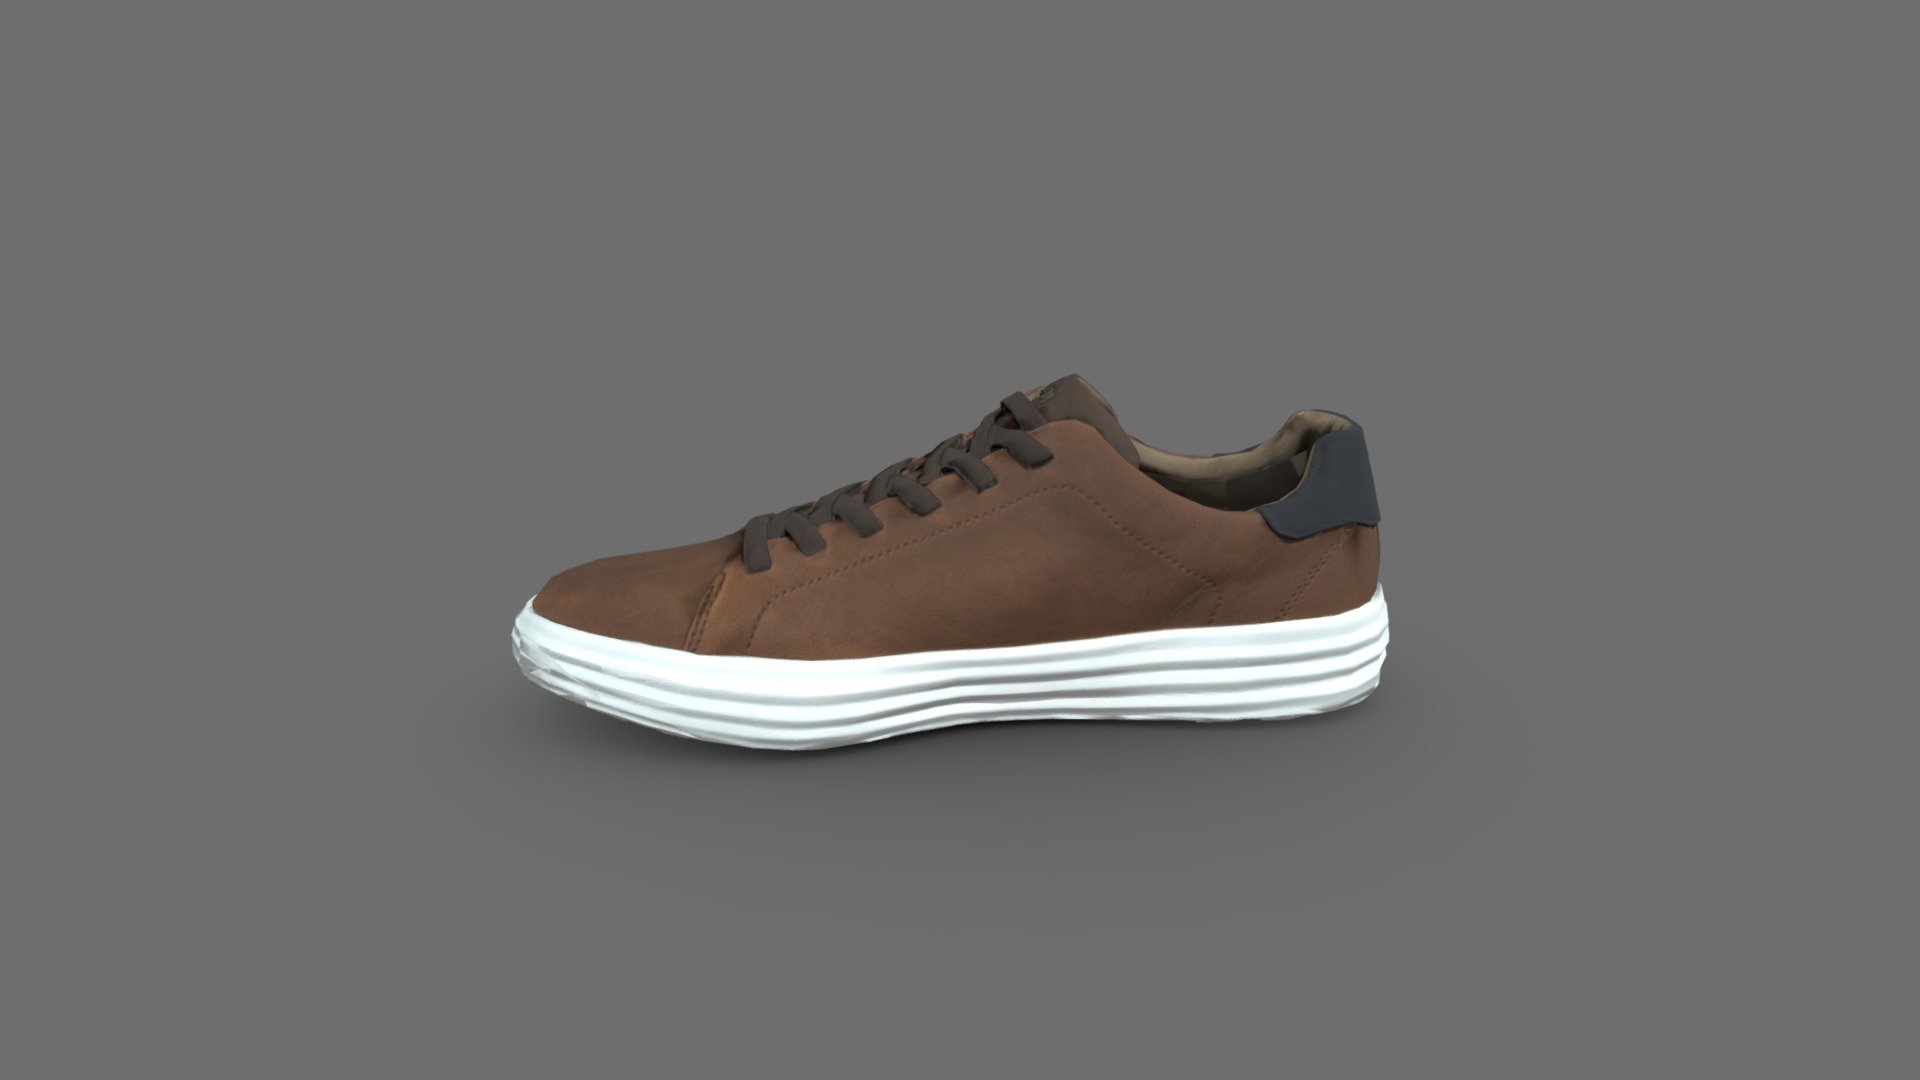 Designer Shoe. Mark Nason. - 3D model by McFX [d8a6c6d] - Sketchfab